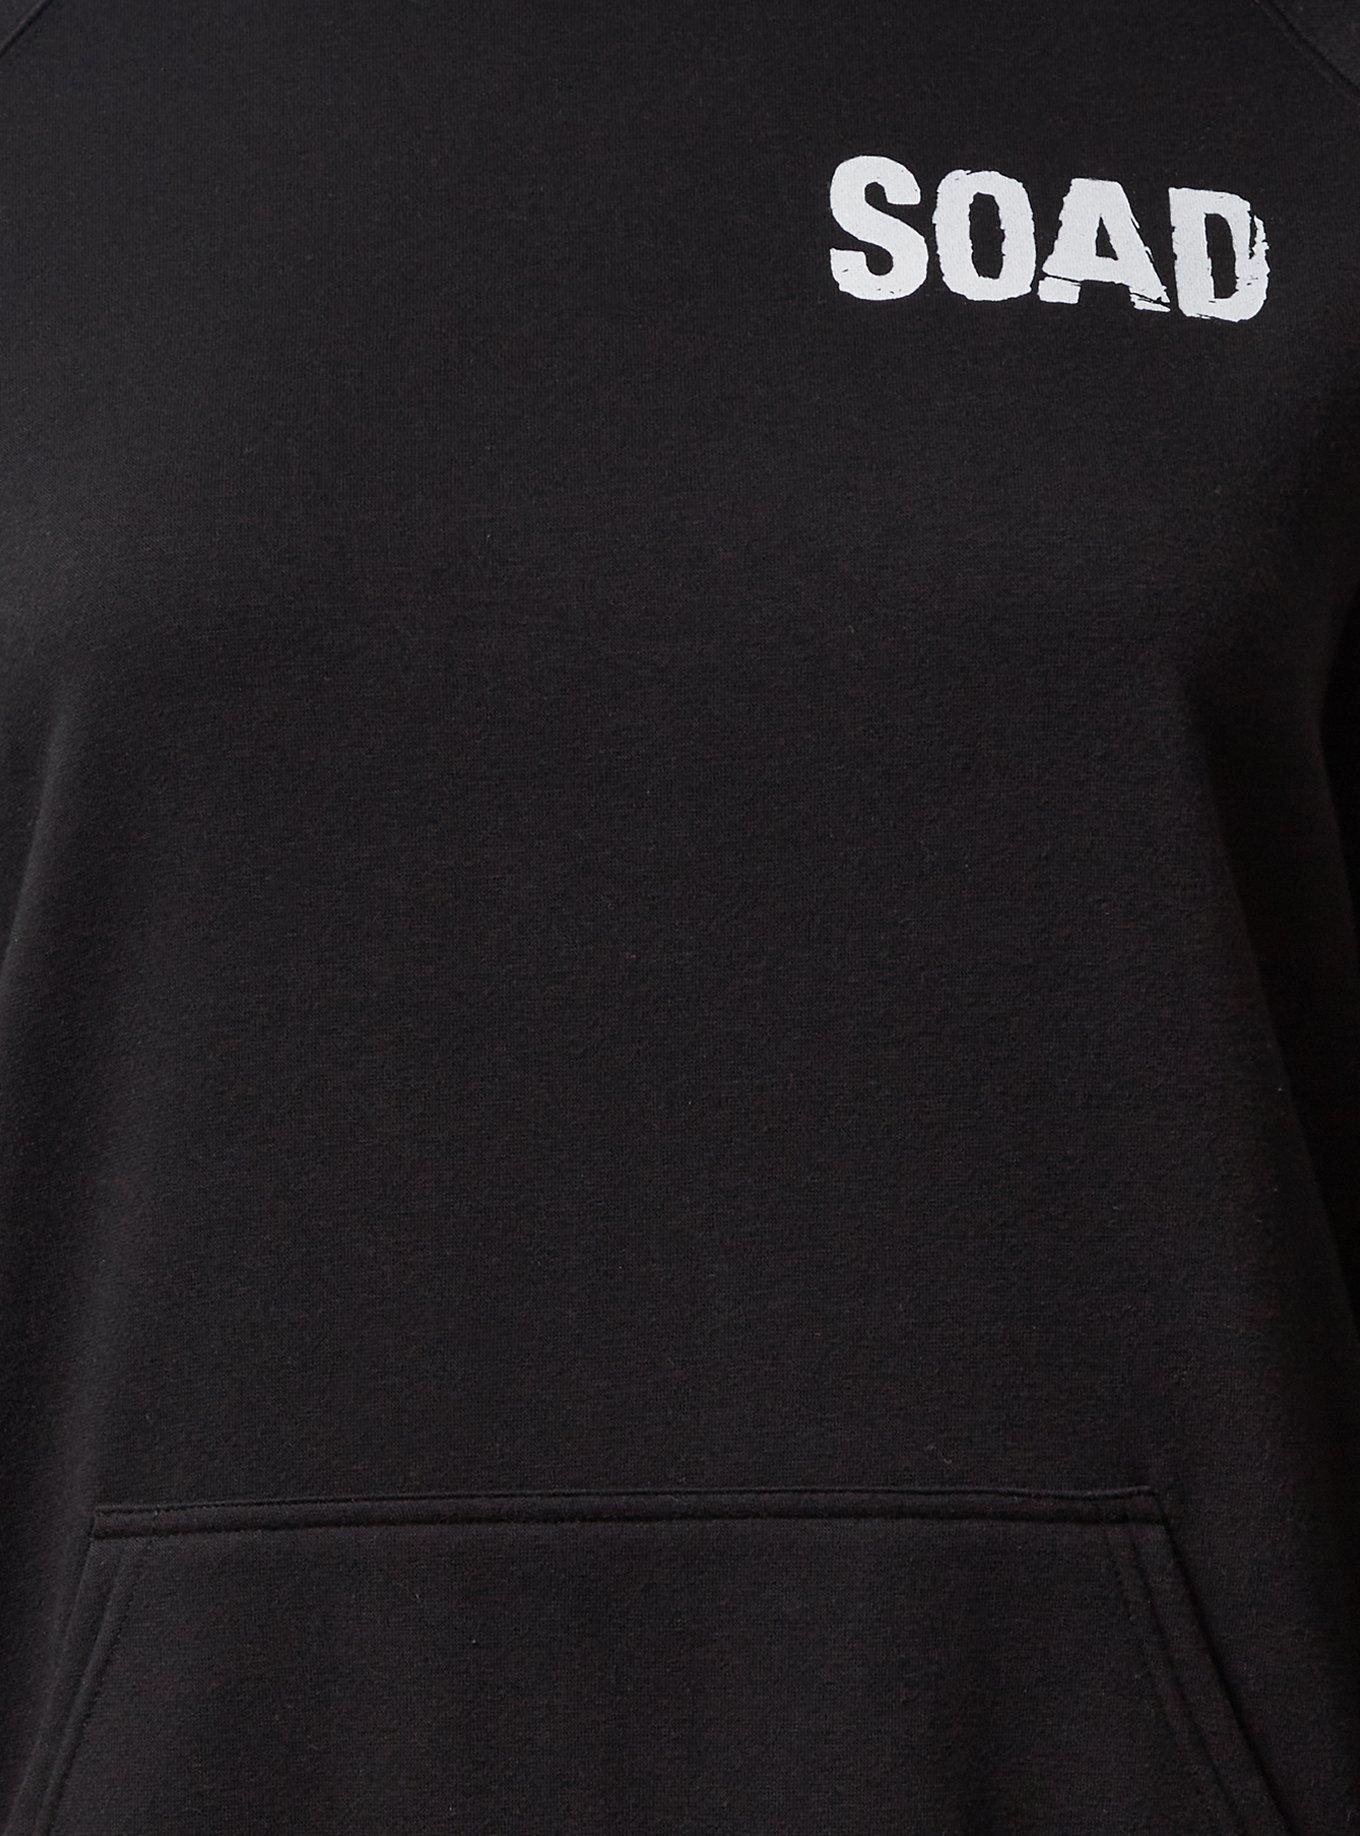 Spanx Black Perfect Length Crewneck Sweatshirt Size M Size M - $42 - From  Amy